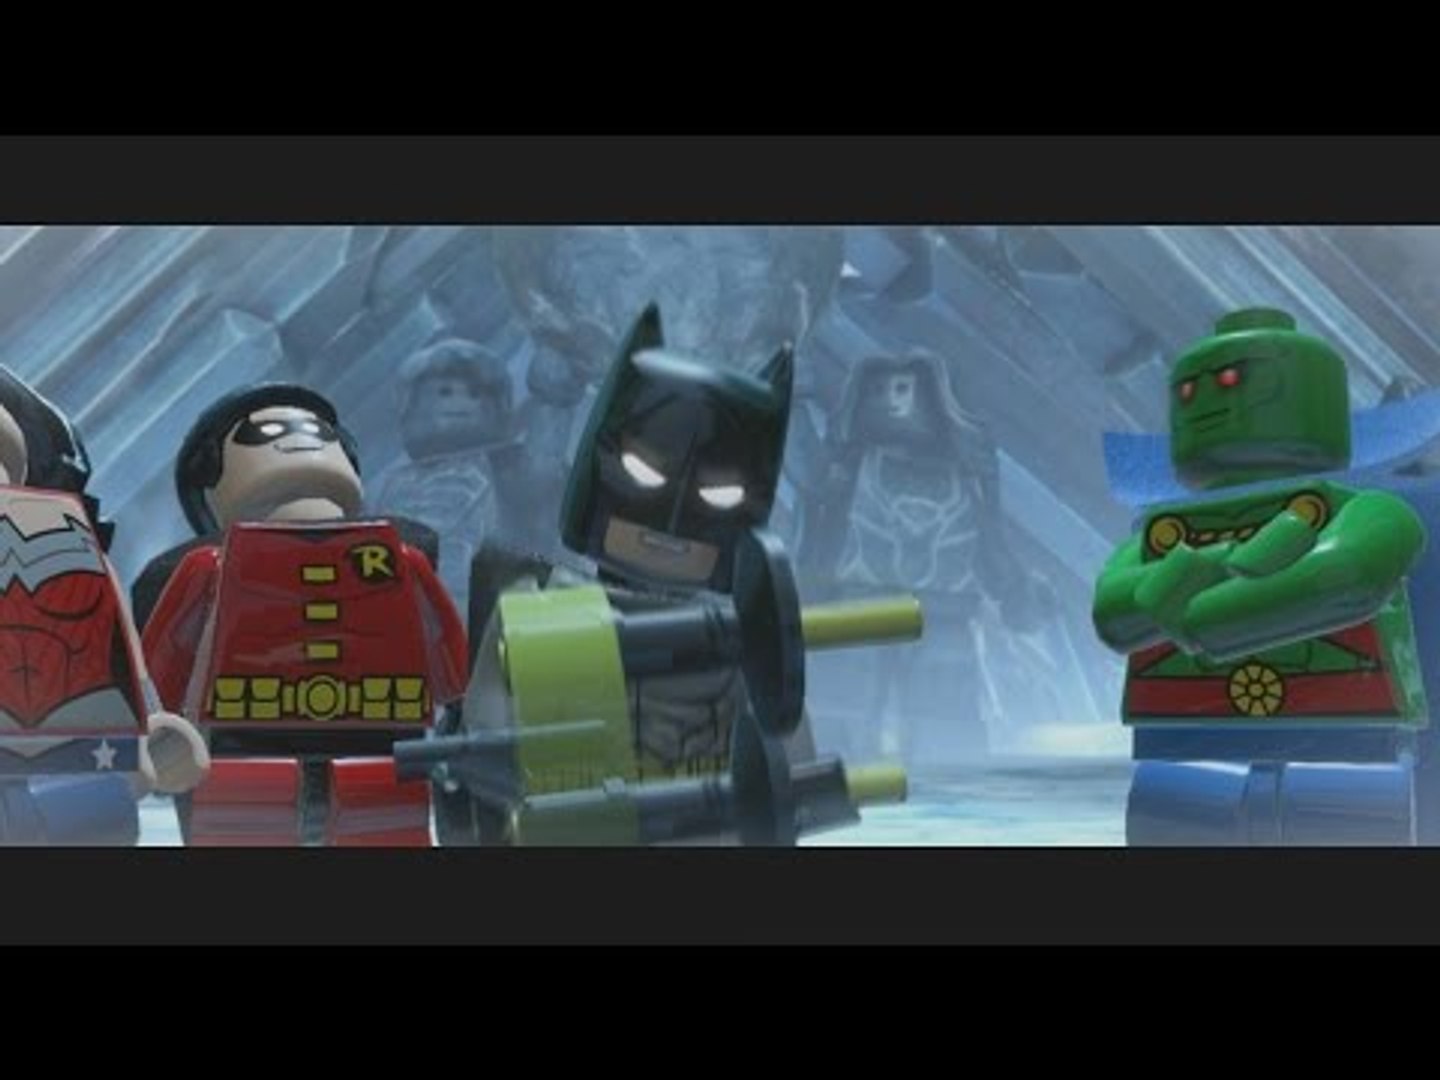 Lego Batman 3 Beyond Gotham Walkthrough Part 1 - Pursuers in the